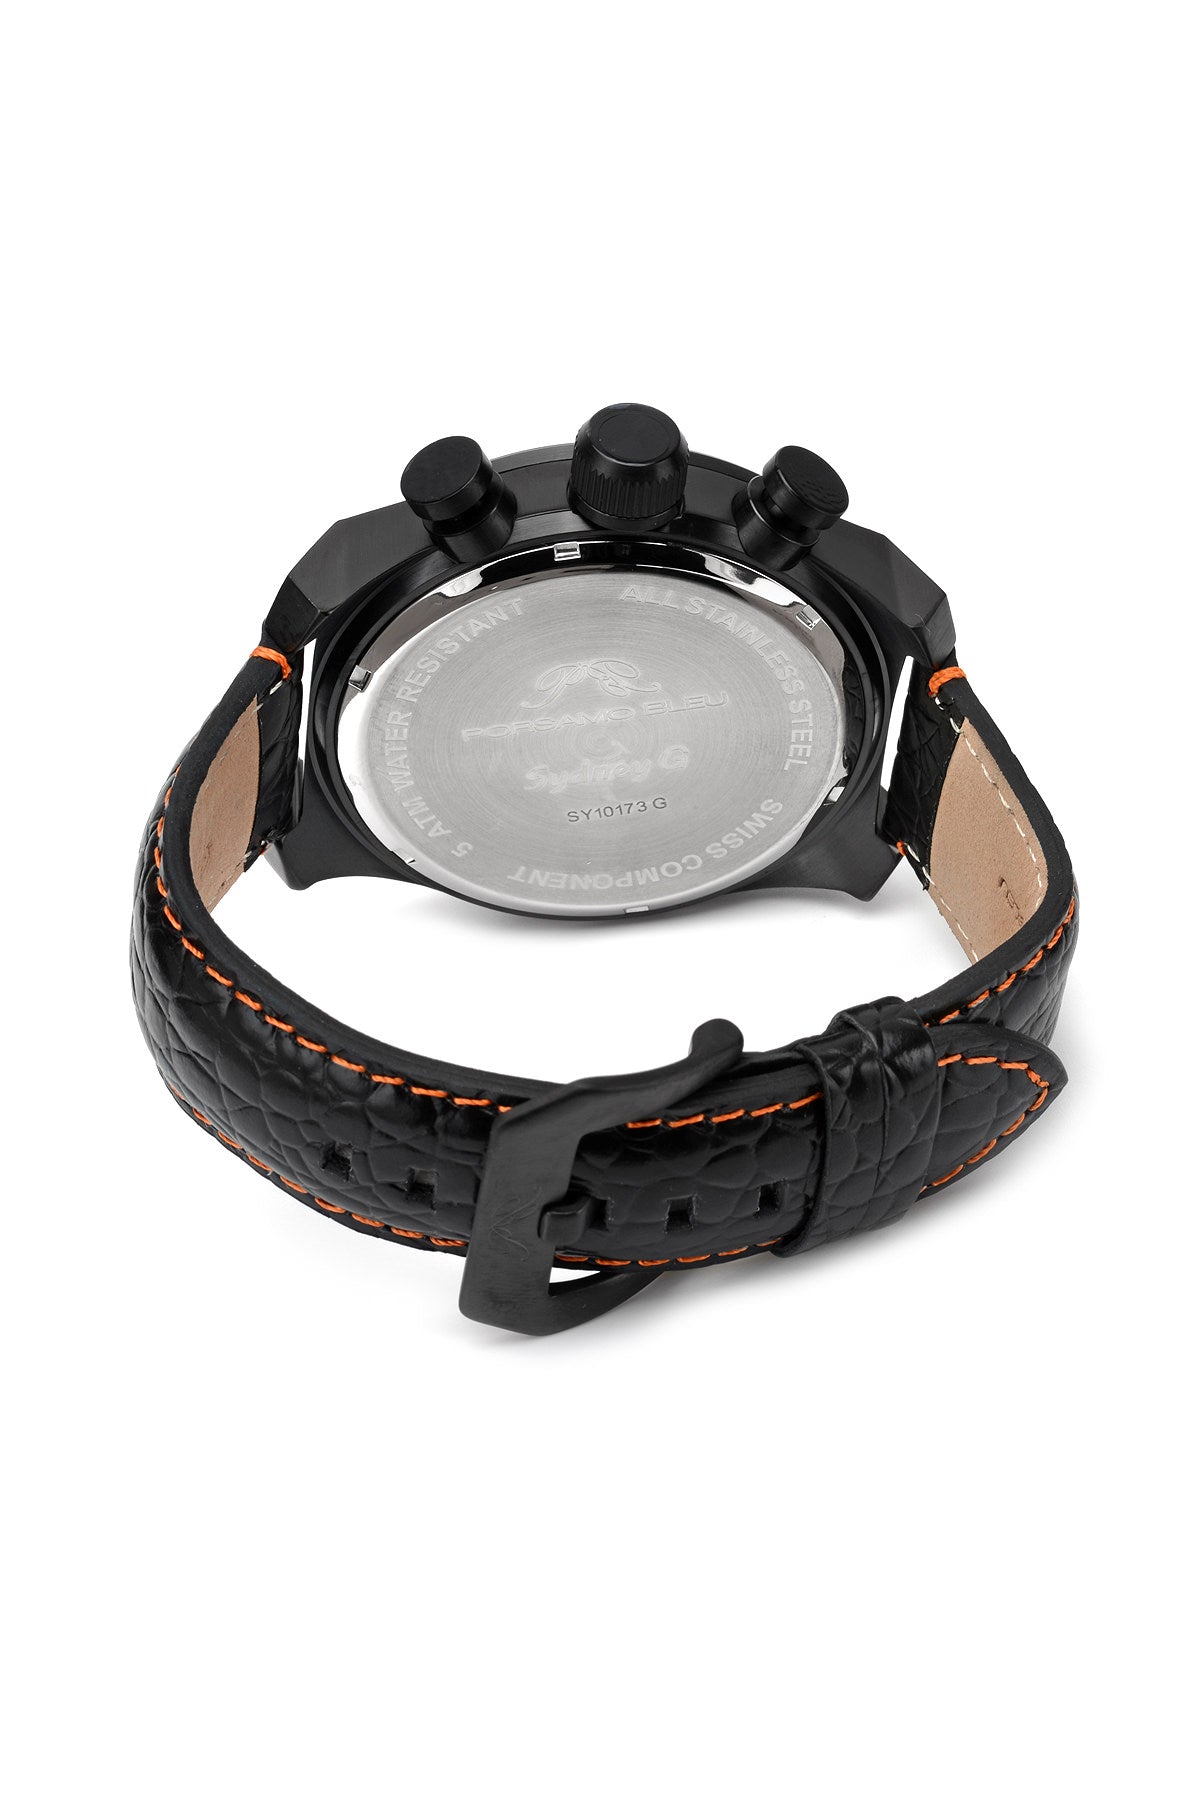 Porsamo Bleu Sydney G luxury men's watch, genuine leather band, black 231ASGL